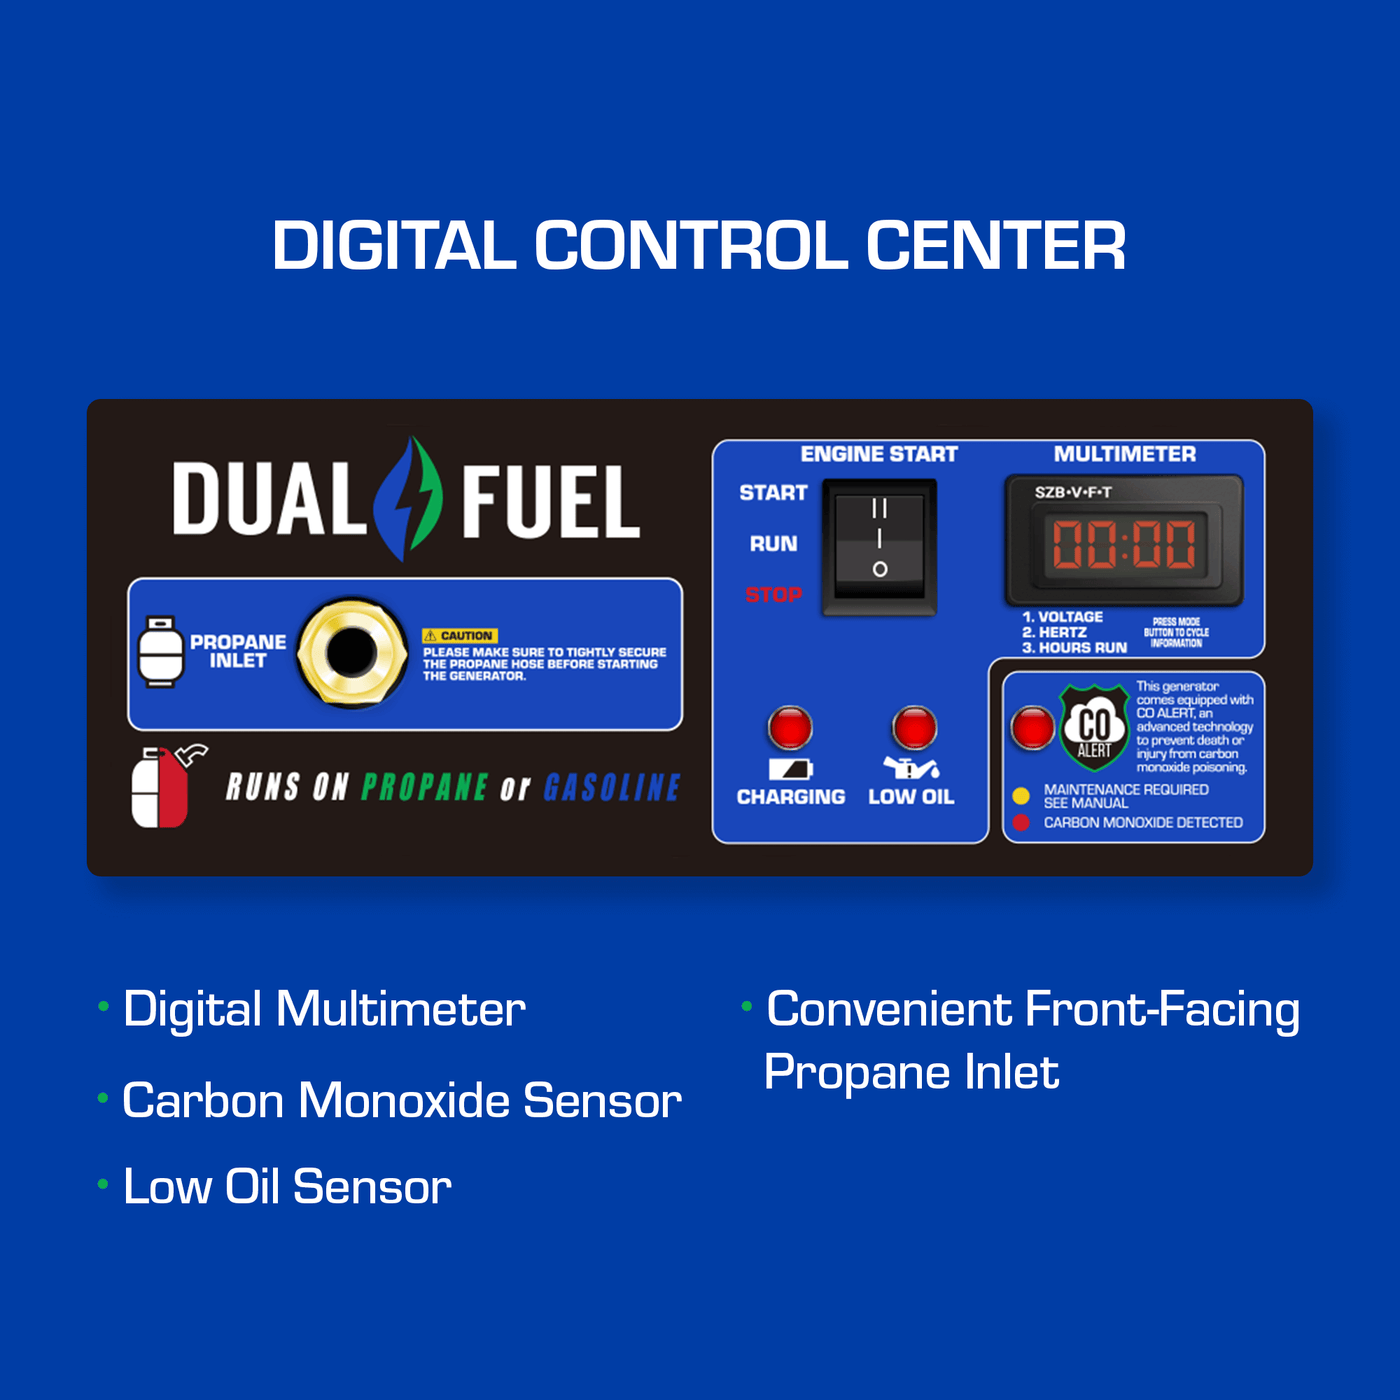 DuroMax XP5500DX 5,500 Watt Dual Fuel Gas Propane Portable Generator w/ CO Alert